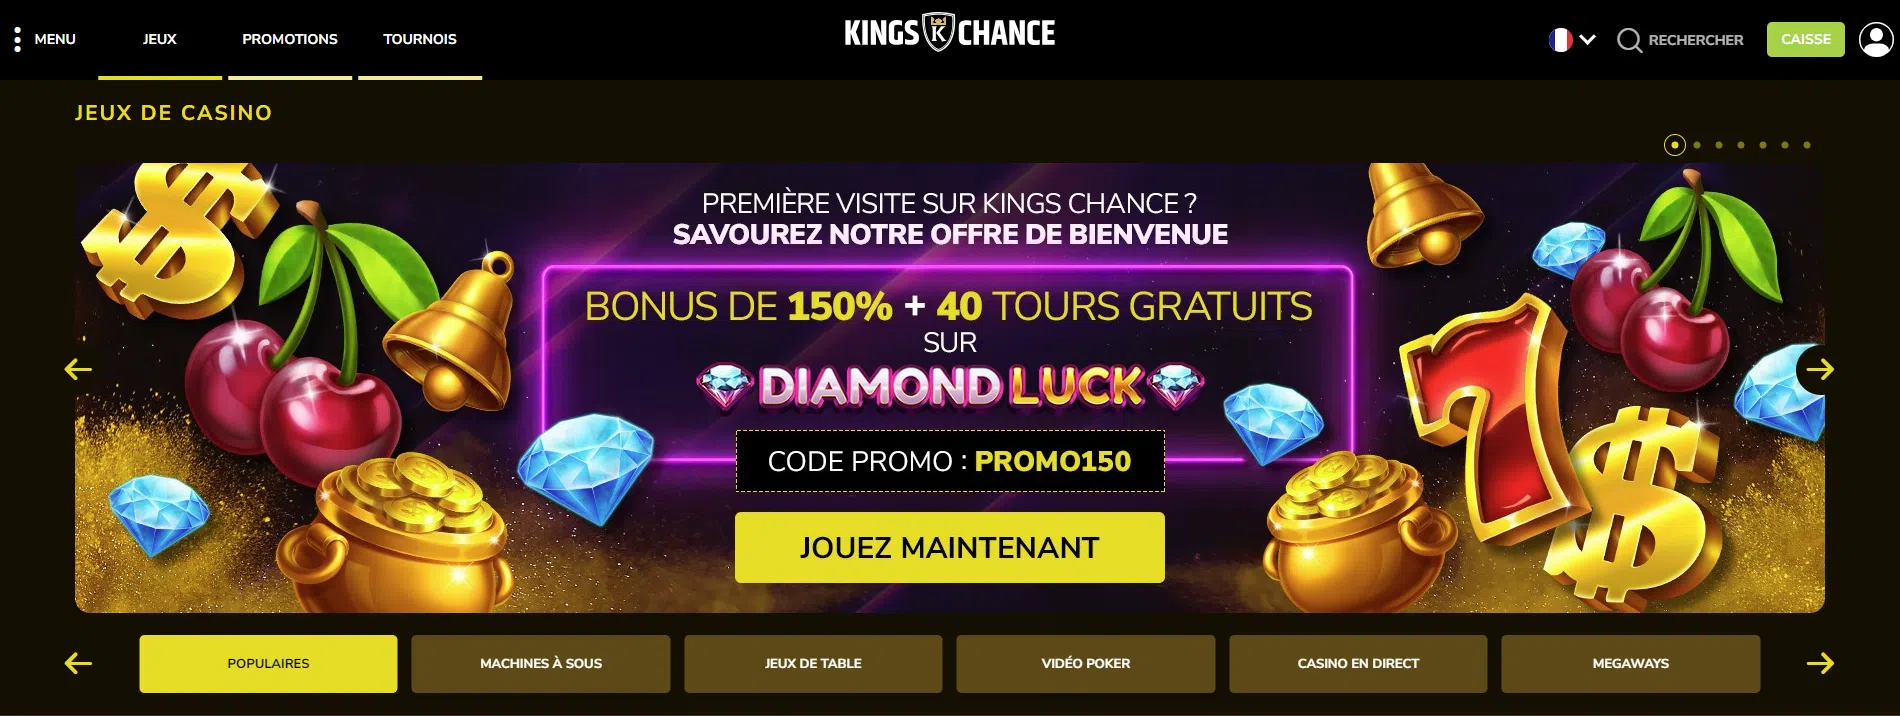 Présentation Kings Chance Casino